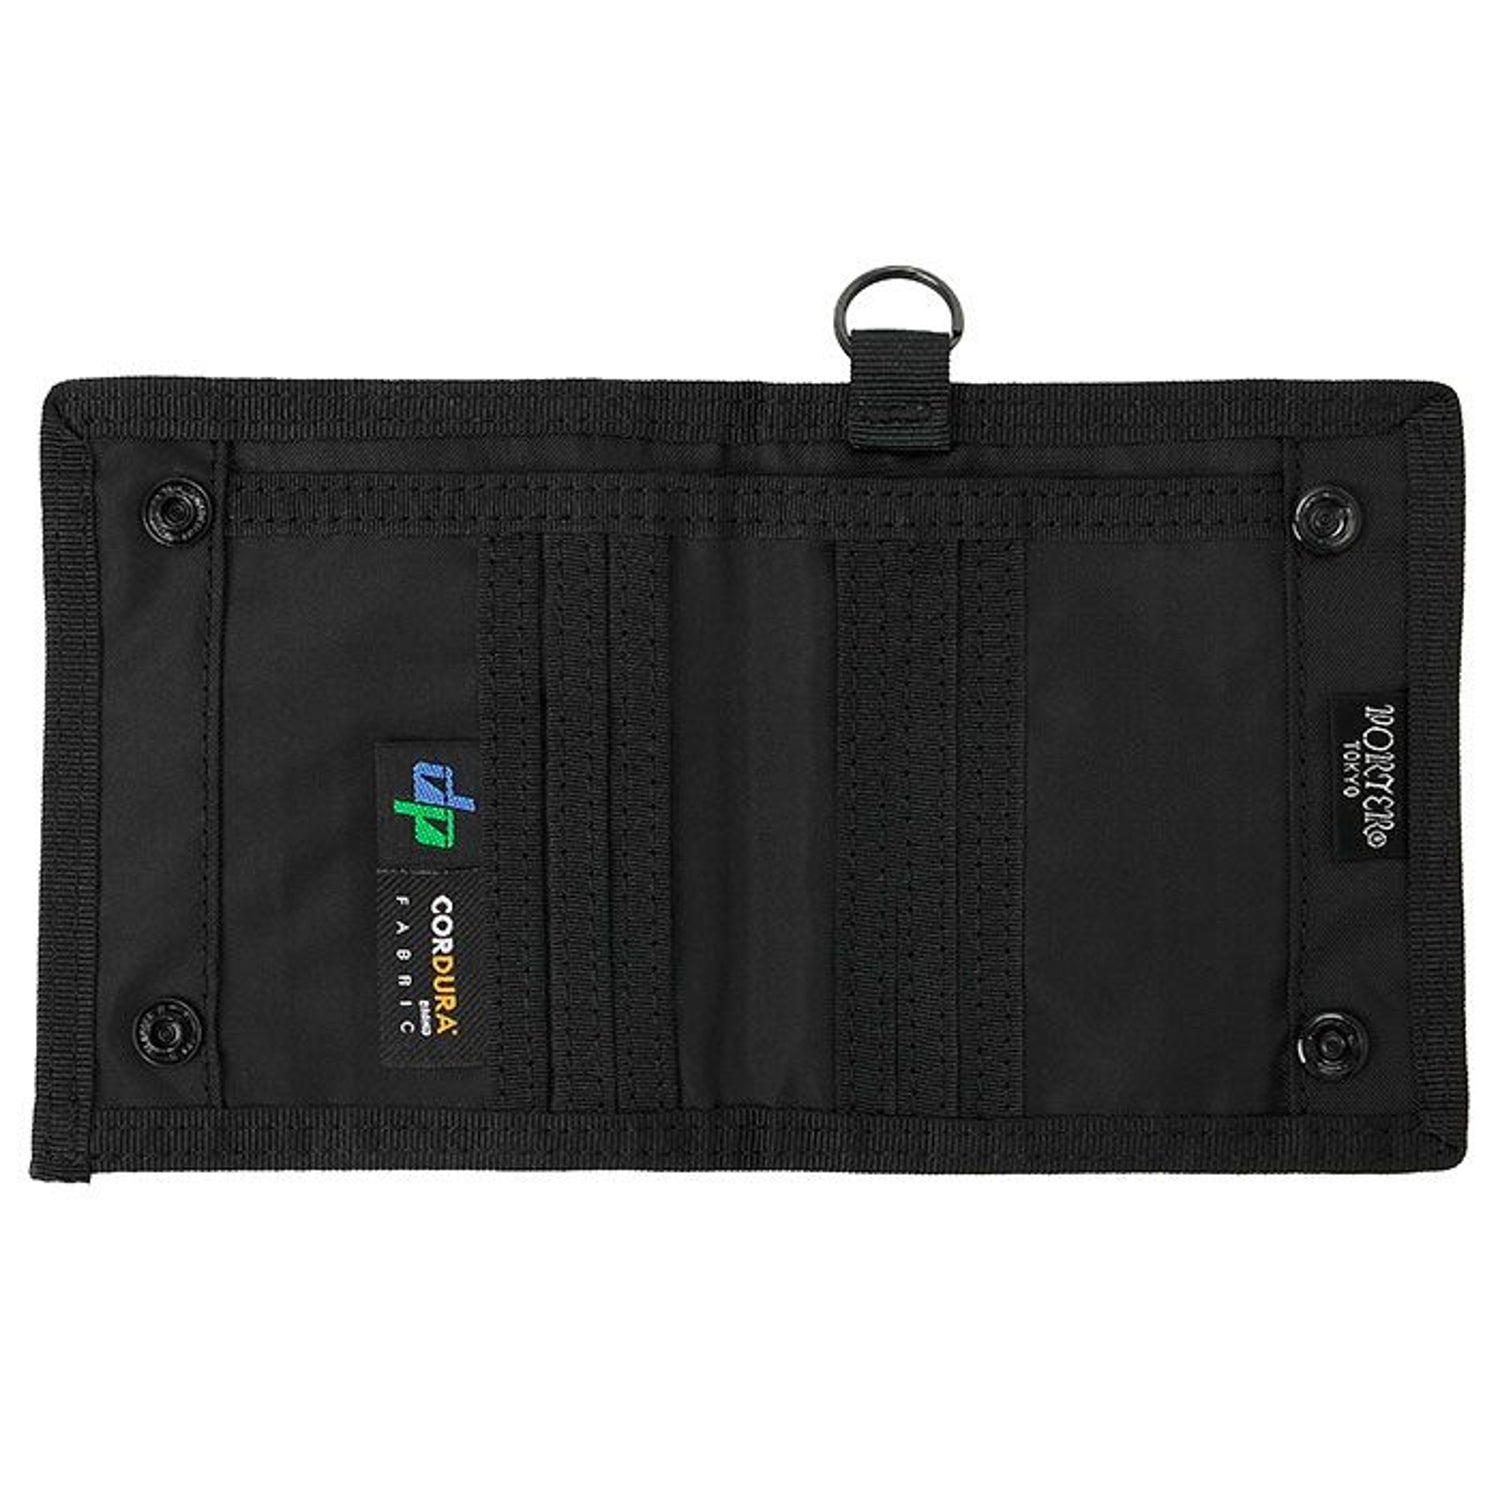 Porter Hybrid Wallet Black (AmaflightschoolShops)